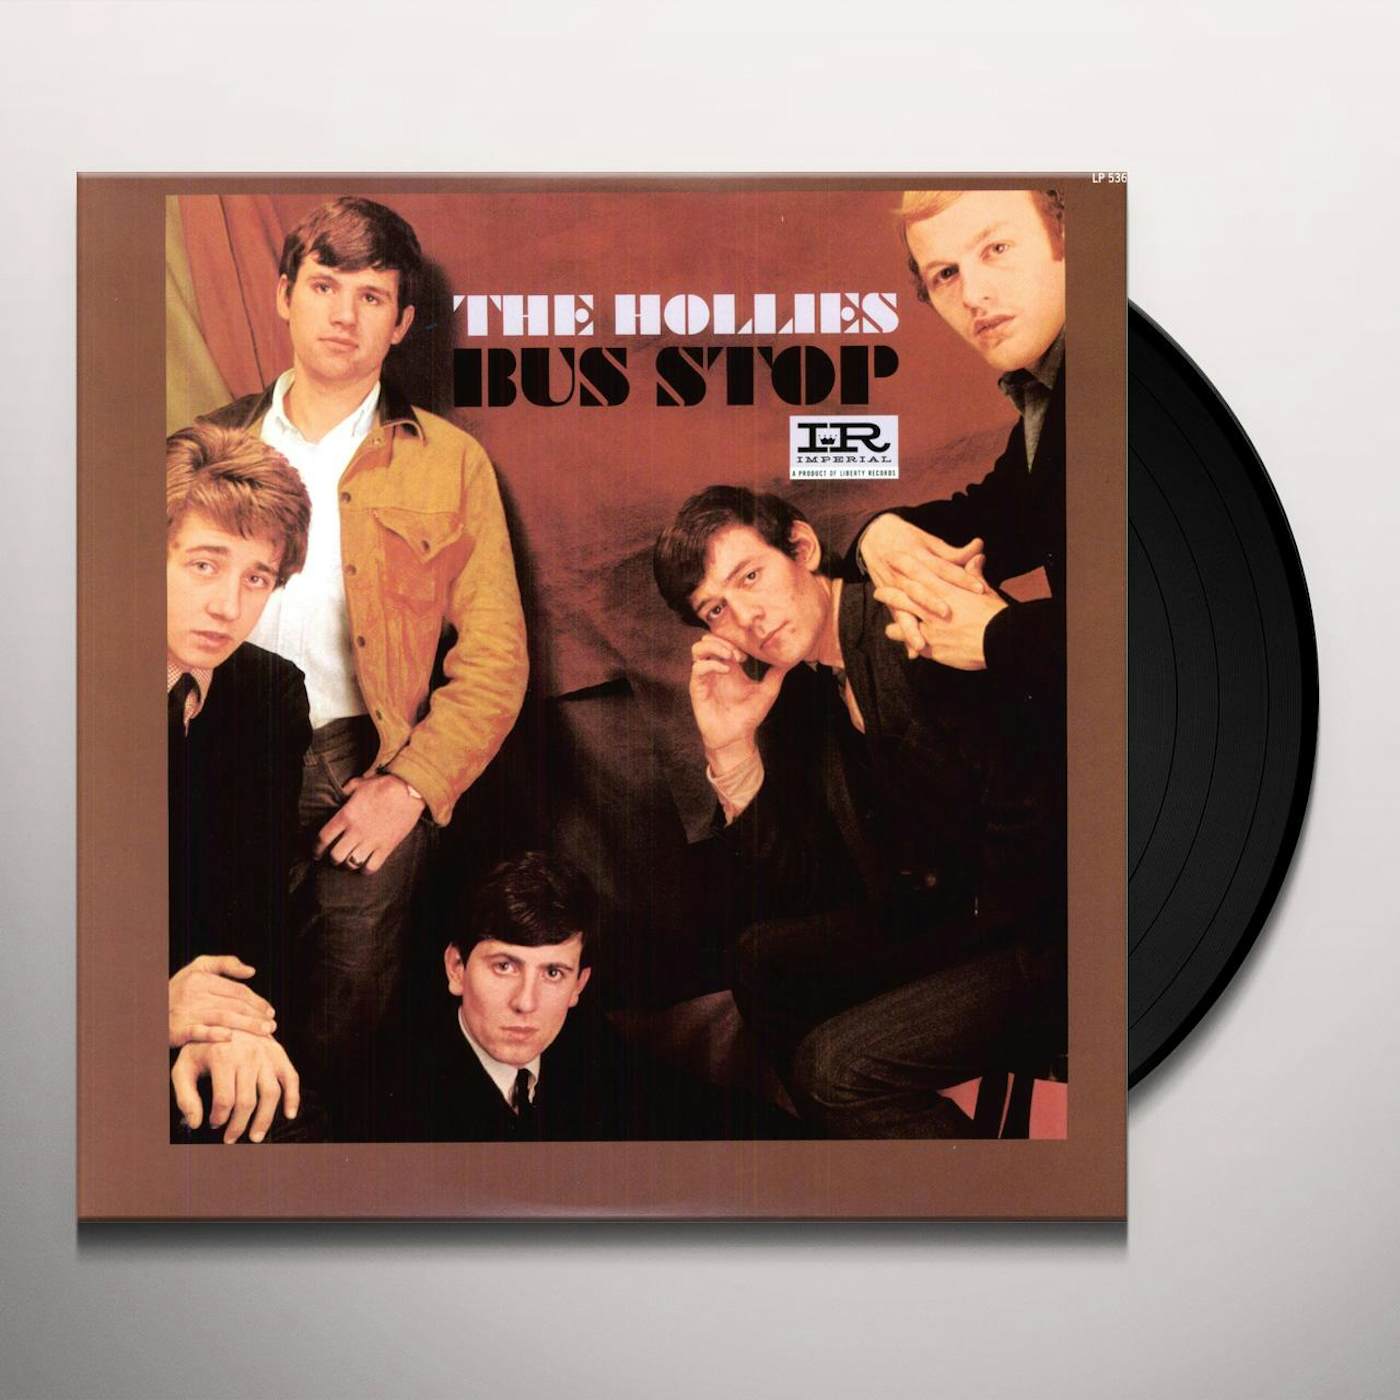 The Hollies Bus Stop Vinyl Record